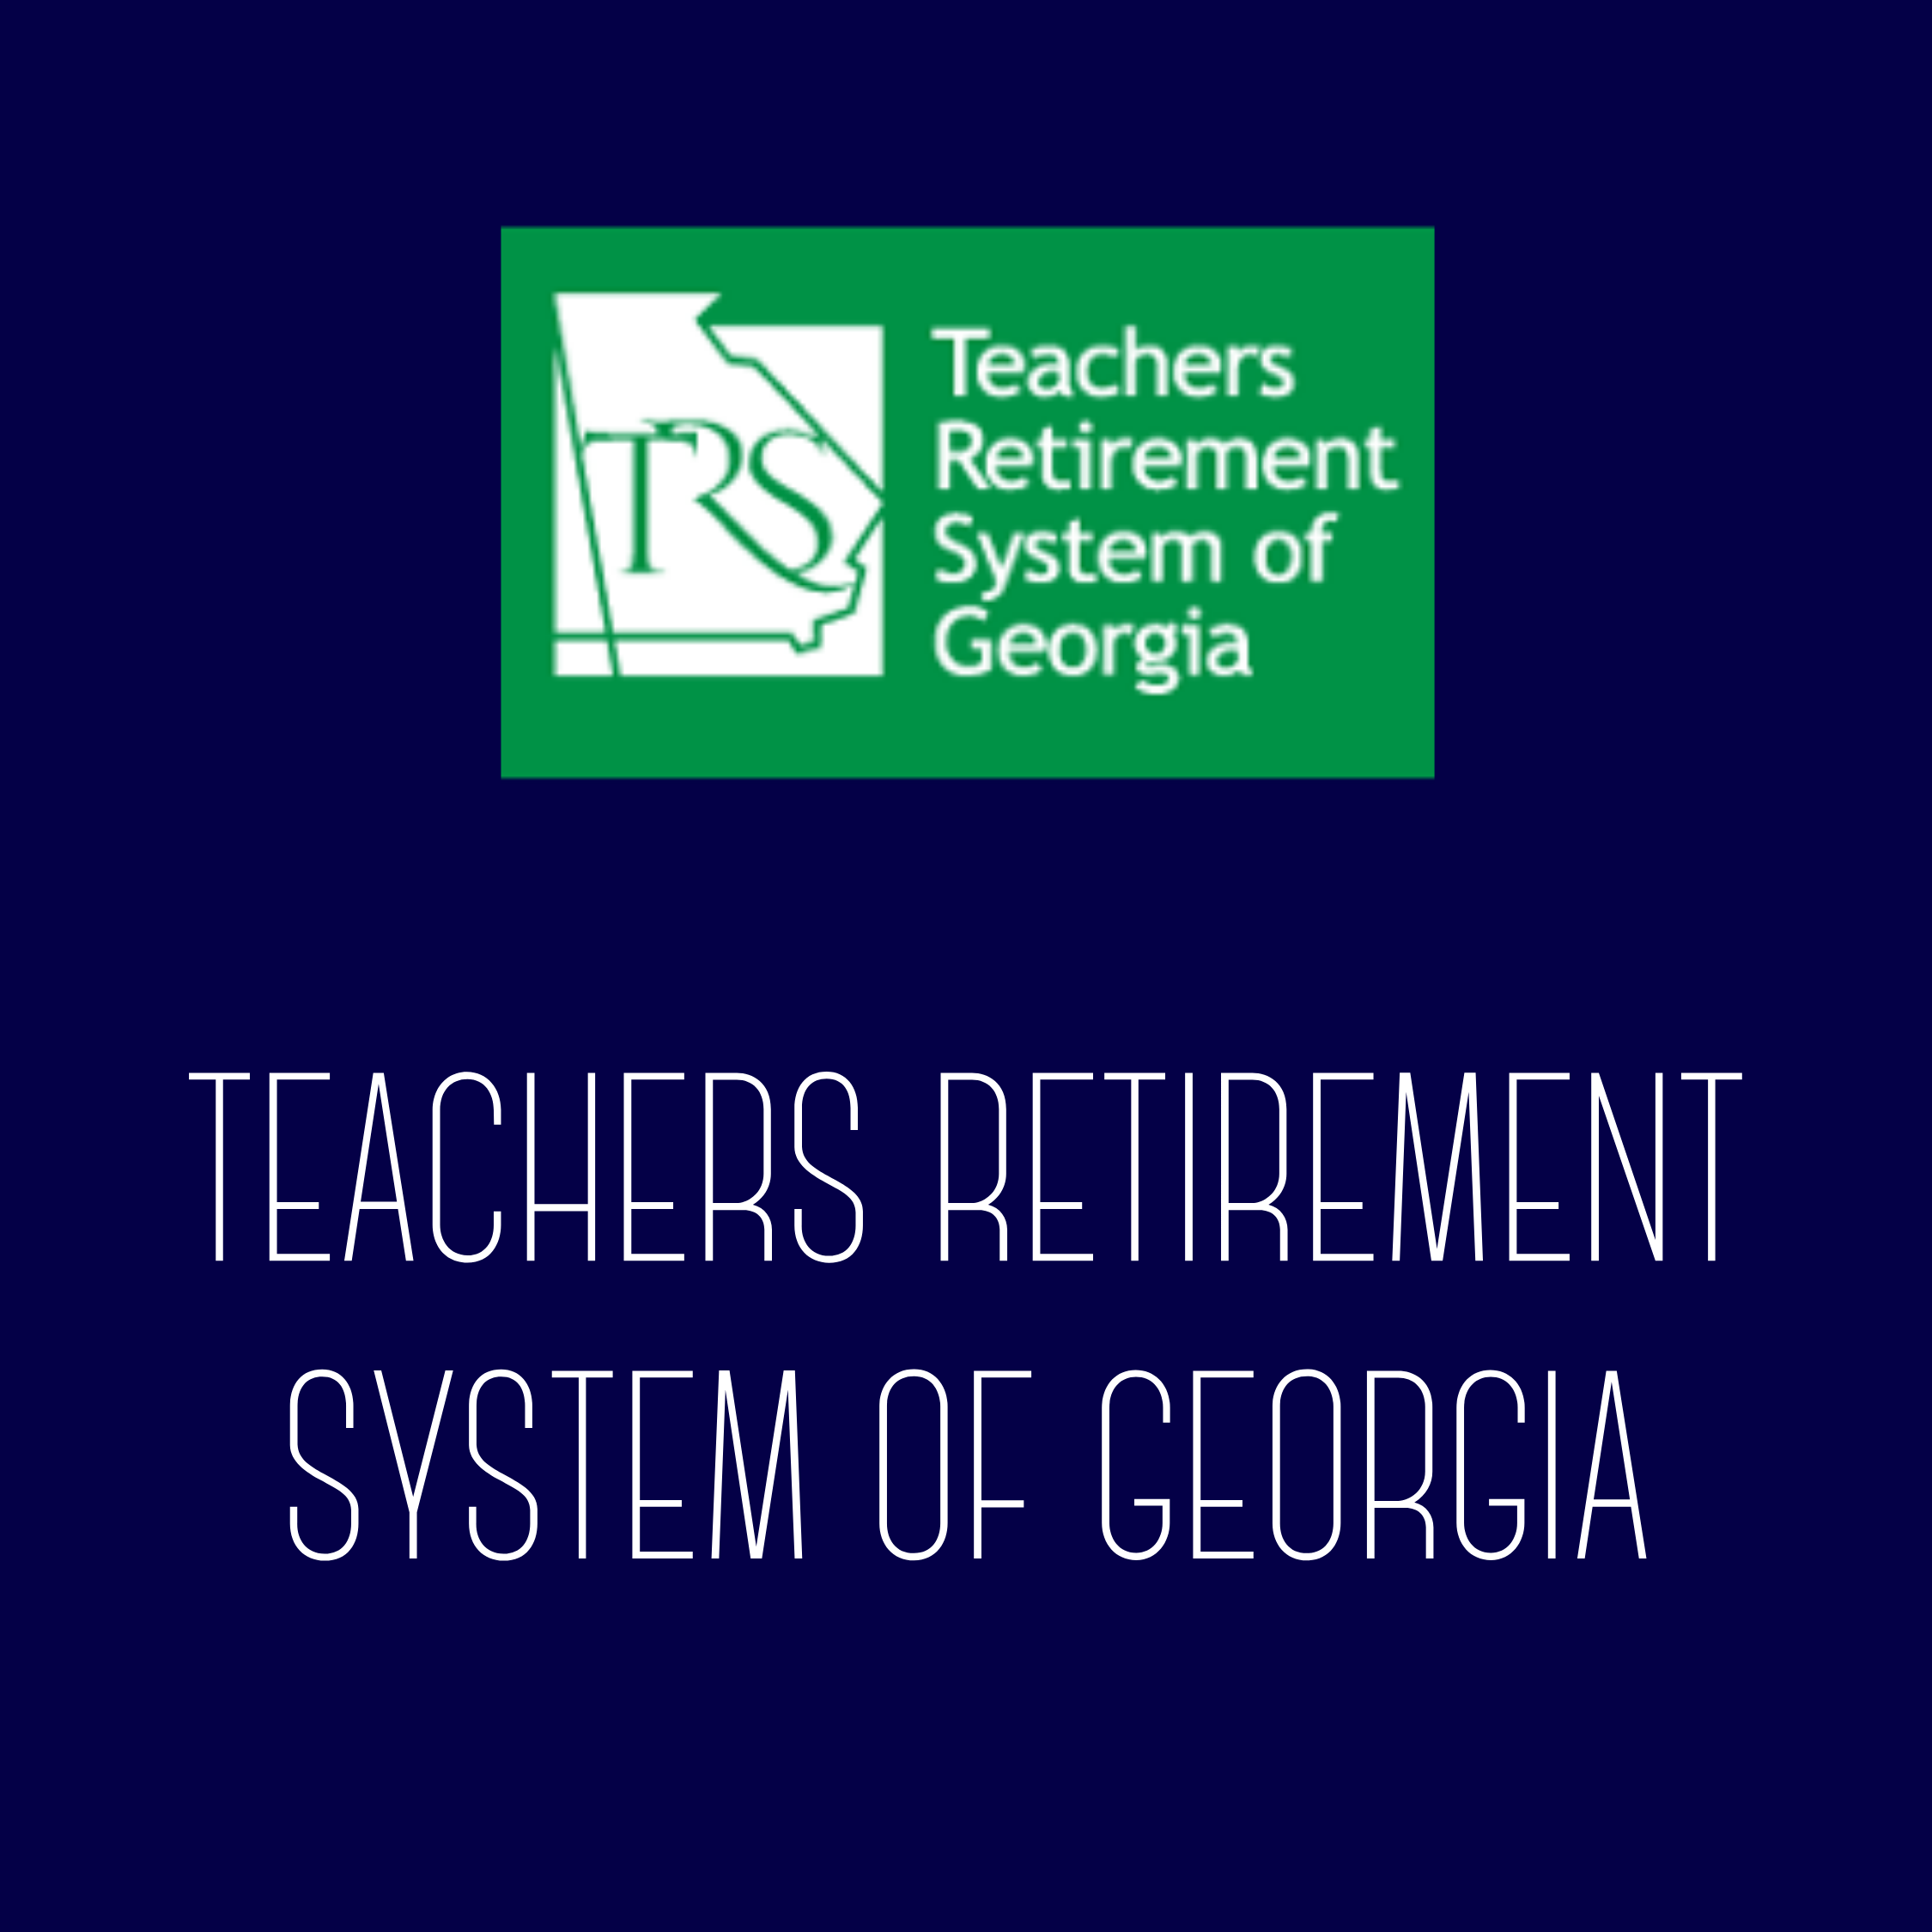 Teachers Retirement System of Georgia